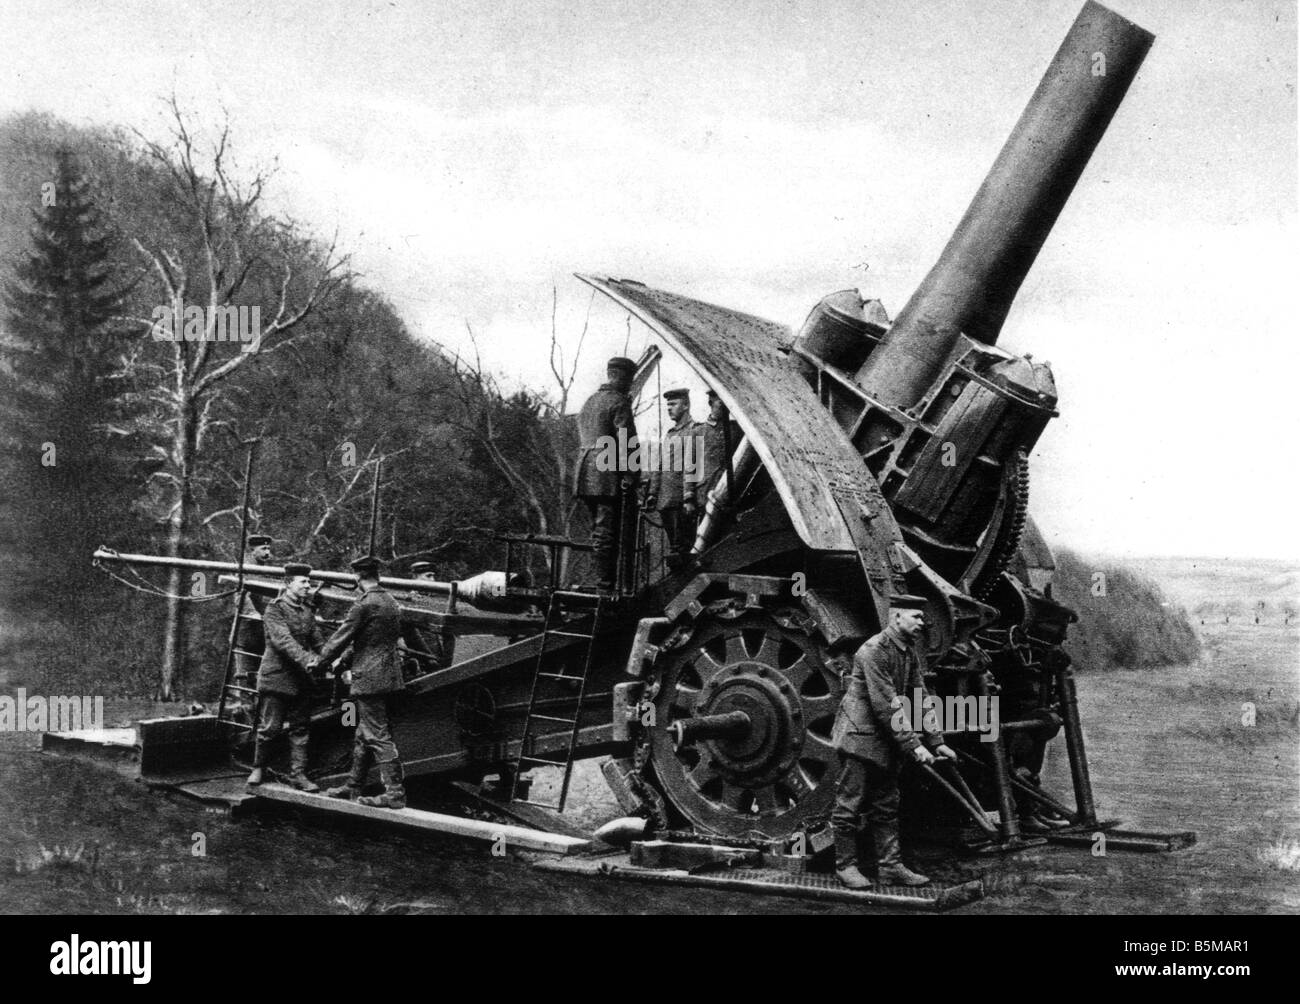 WWI Ger artillery Mortar Dicke Berta Military Artillery German artillery troops raising a 42cm mortar Dicke Berta Photo undated Stock Photo